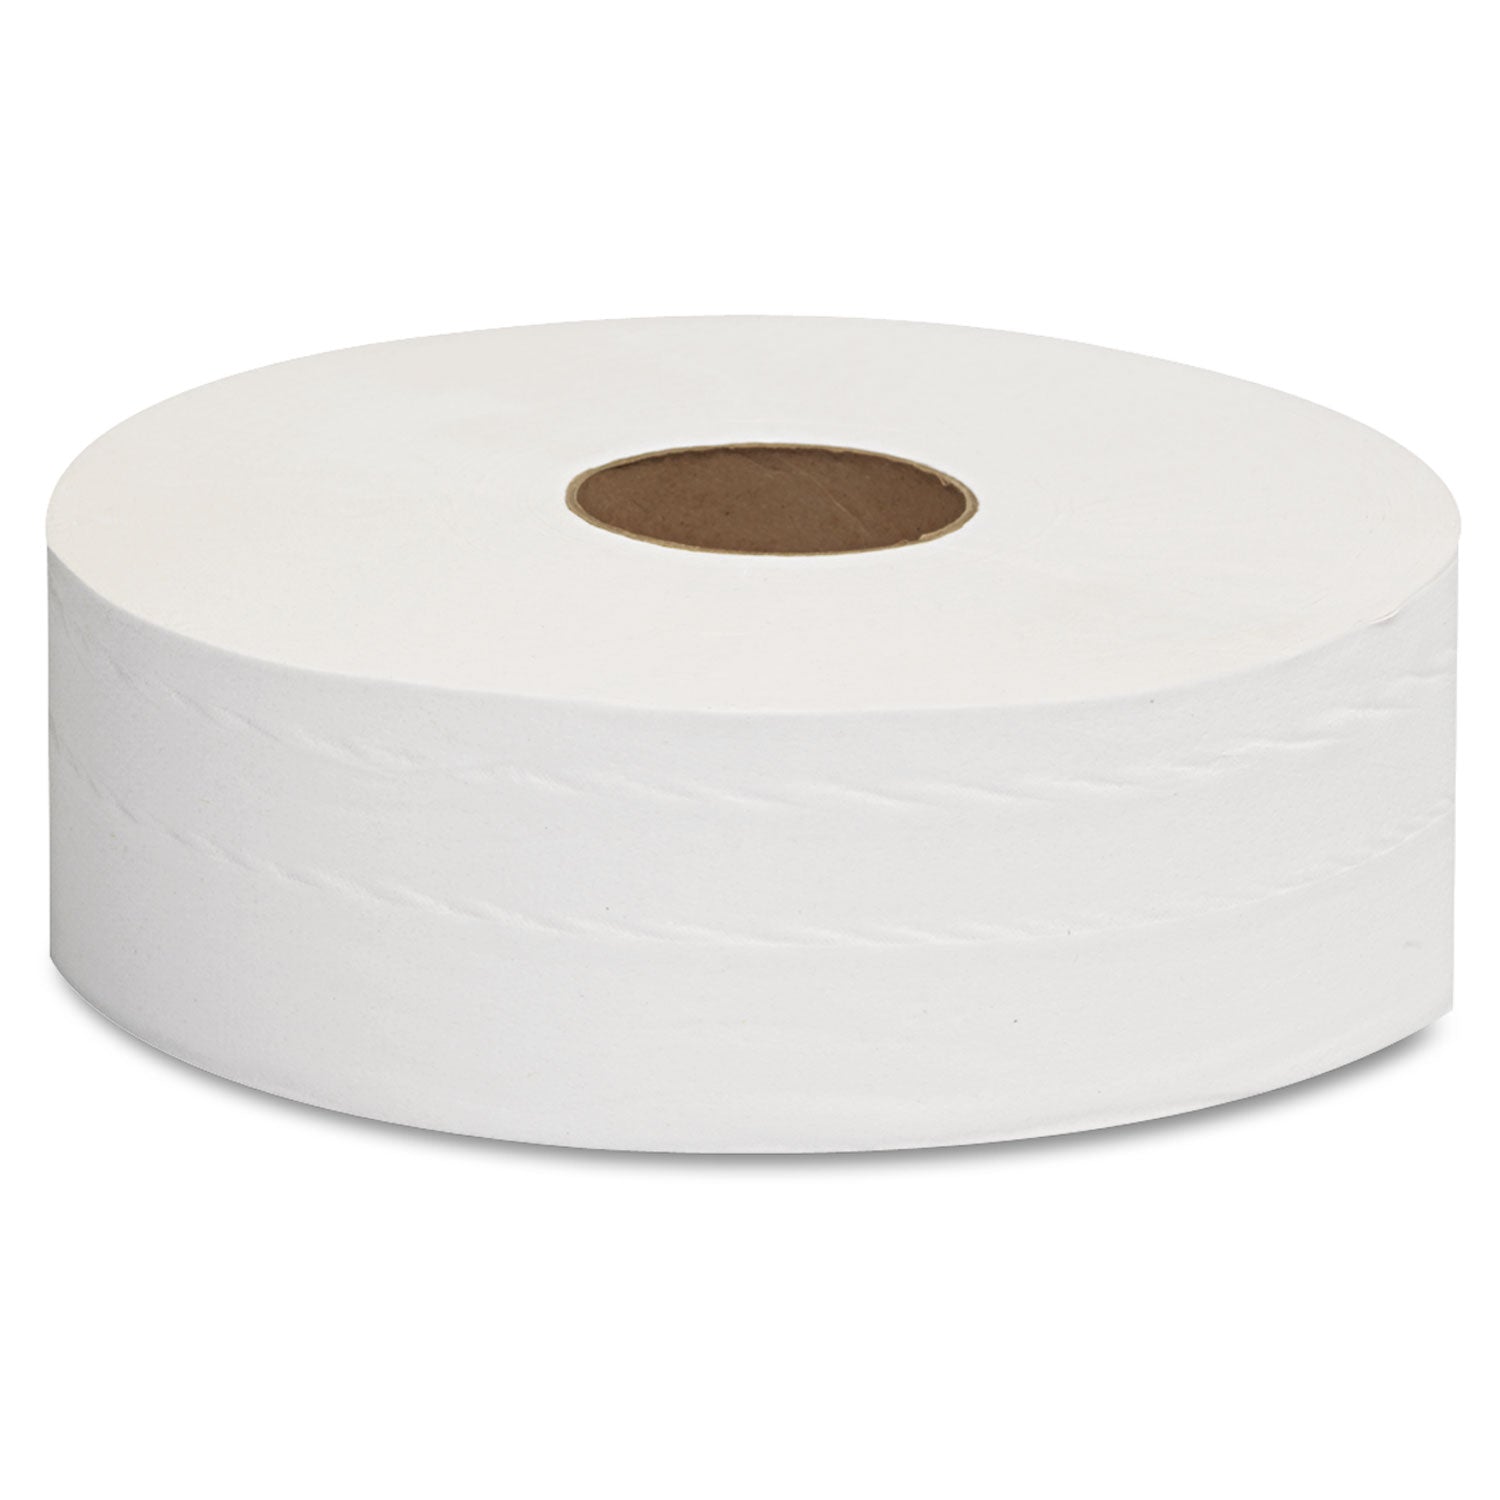 jrt-jumbo-bath-tissue-septic-safe-2-ply-white-33-x-1375-ft-12-dia-6-rolls-carton_gen1513 - 4